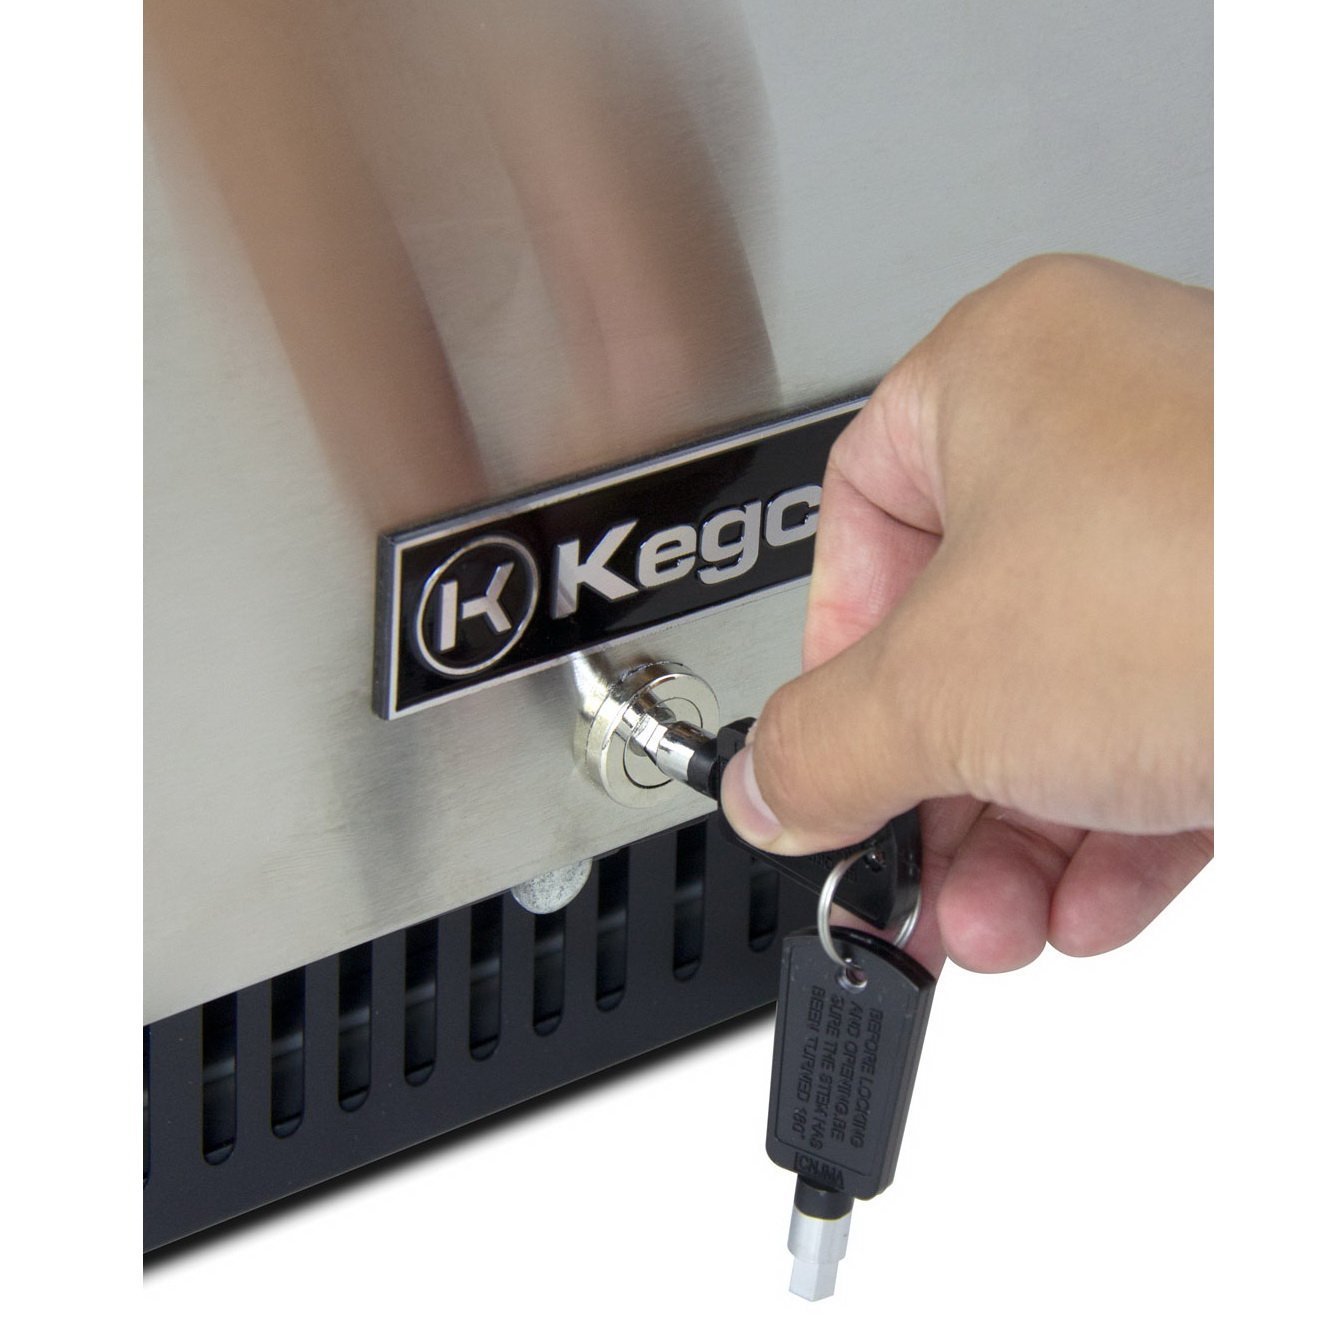 Kegco SLK15BSR Commercial Grade Single Tap 15" Wide Kegerator with Stainless Steel Door